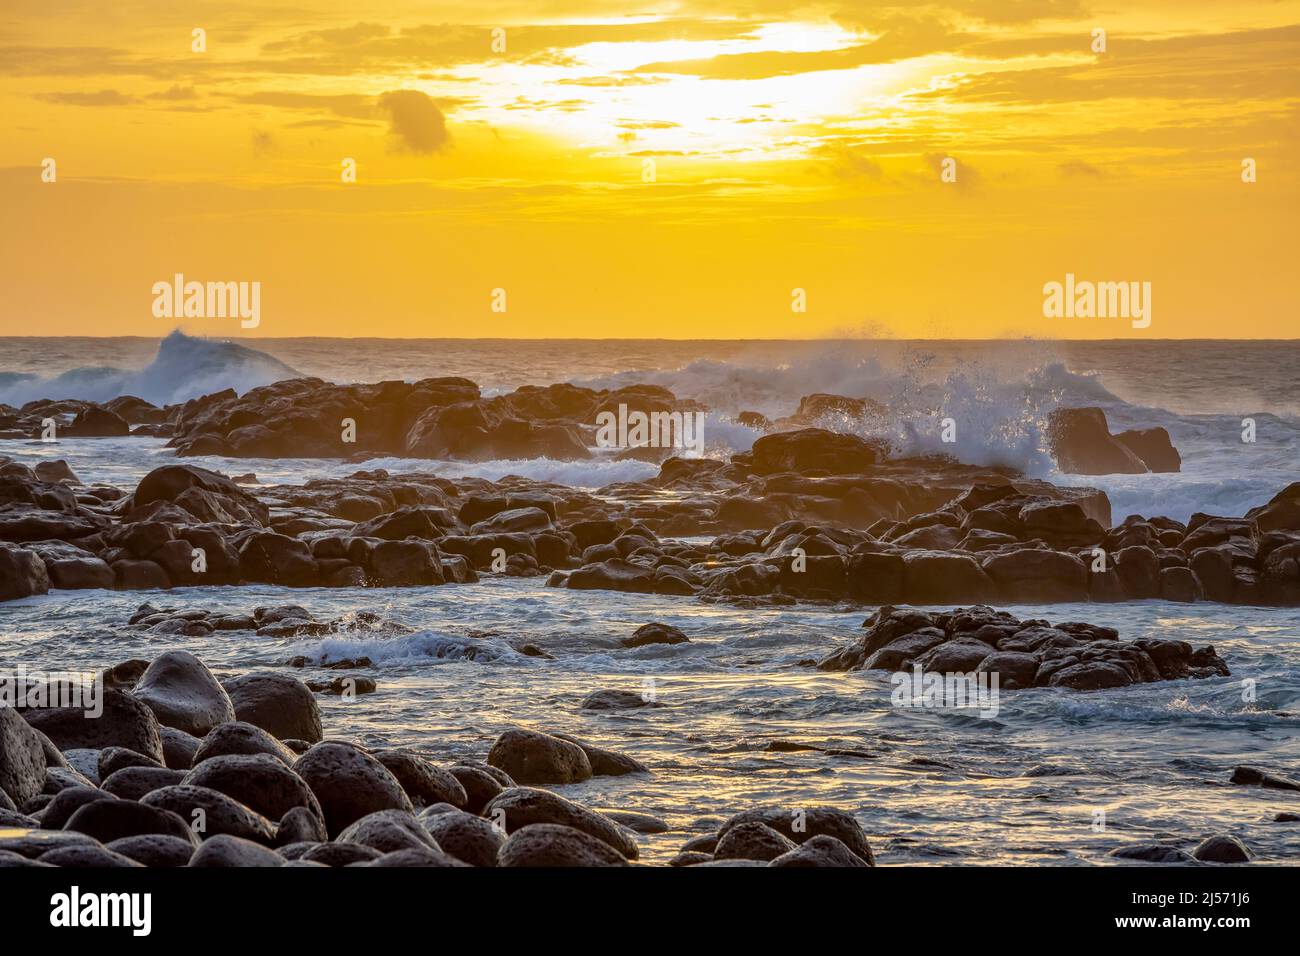 Heavy wave crashing on the rocky beach of Albion due to tropical cyclone Batsirai, west of Mauritius. Stock Photo